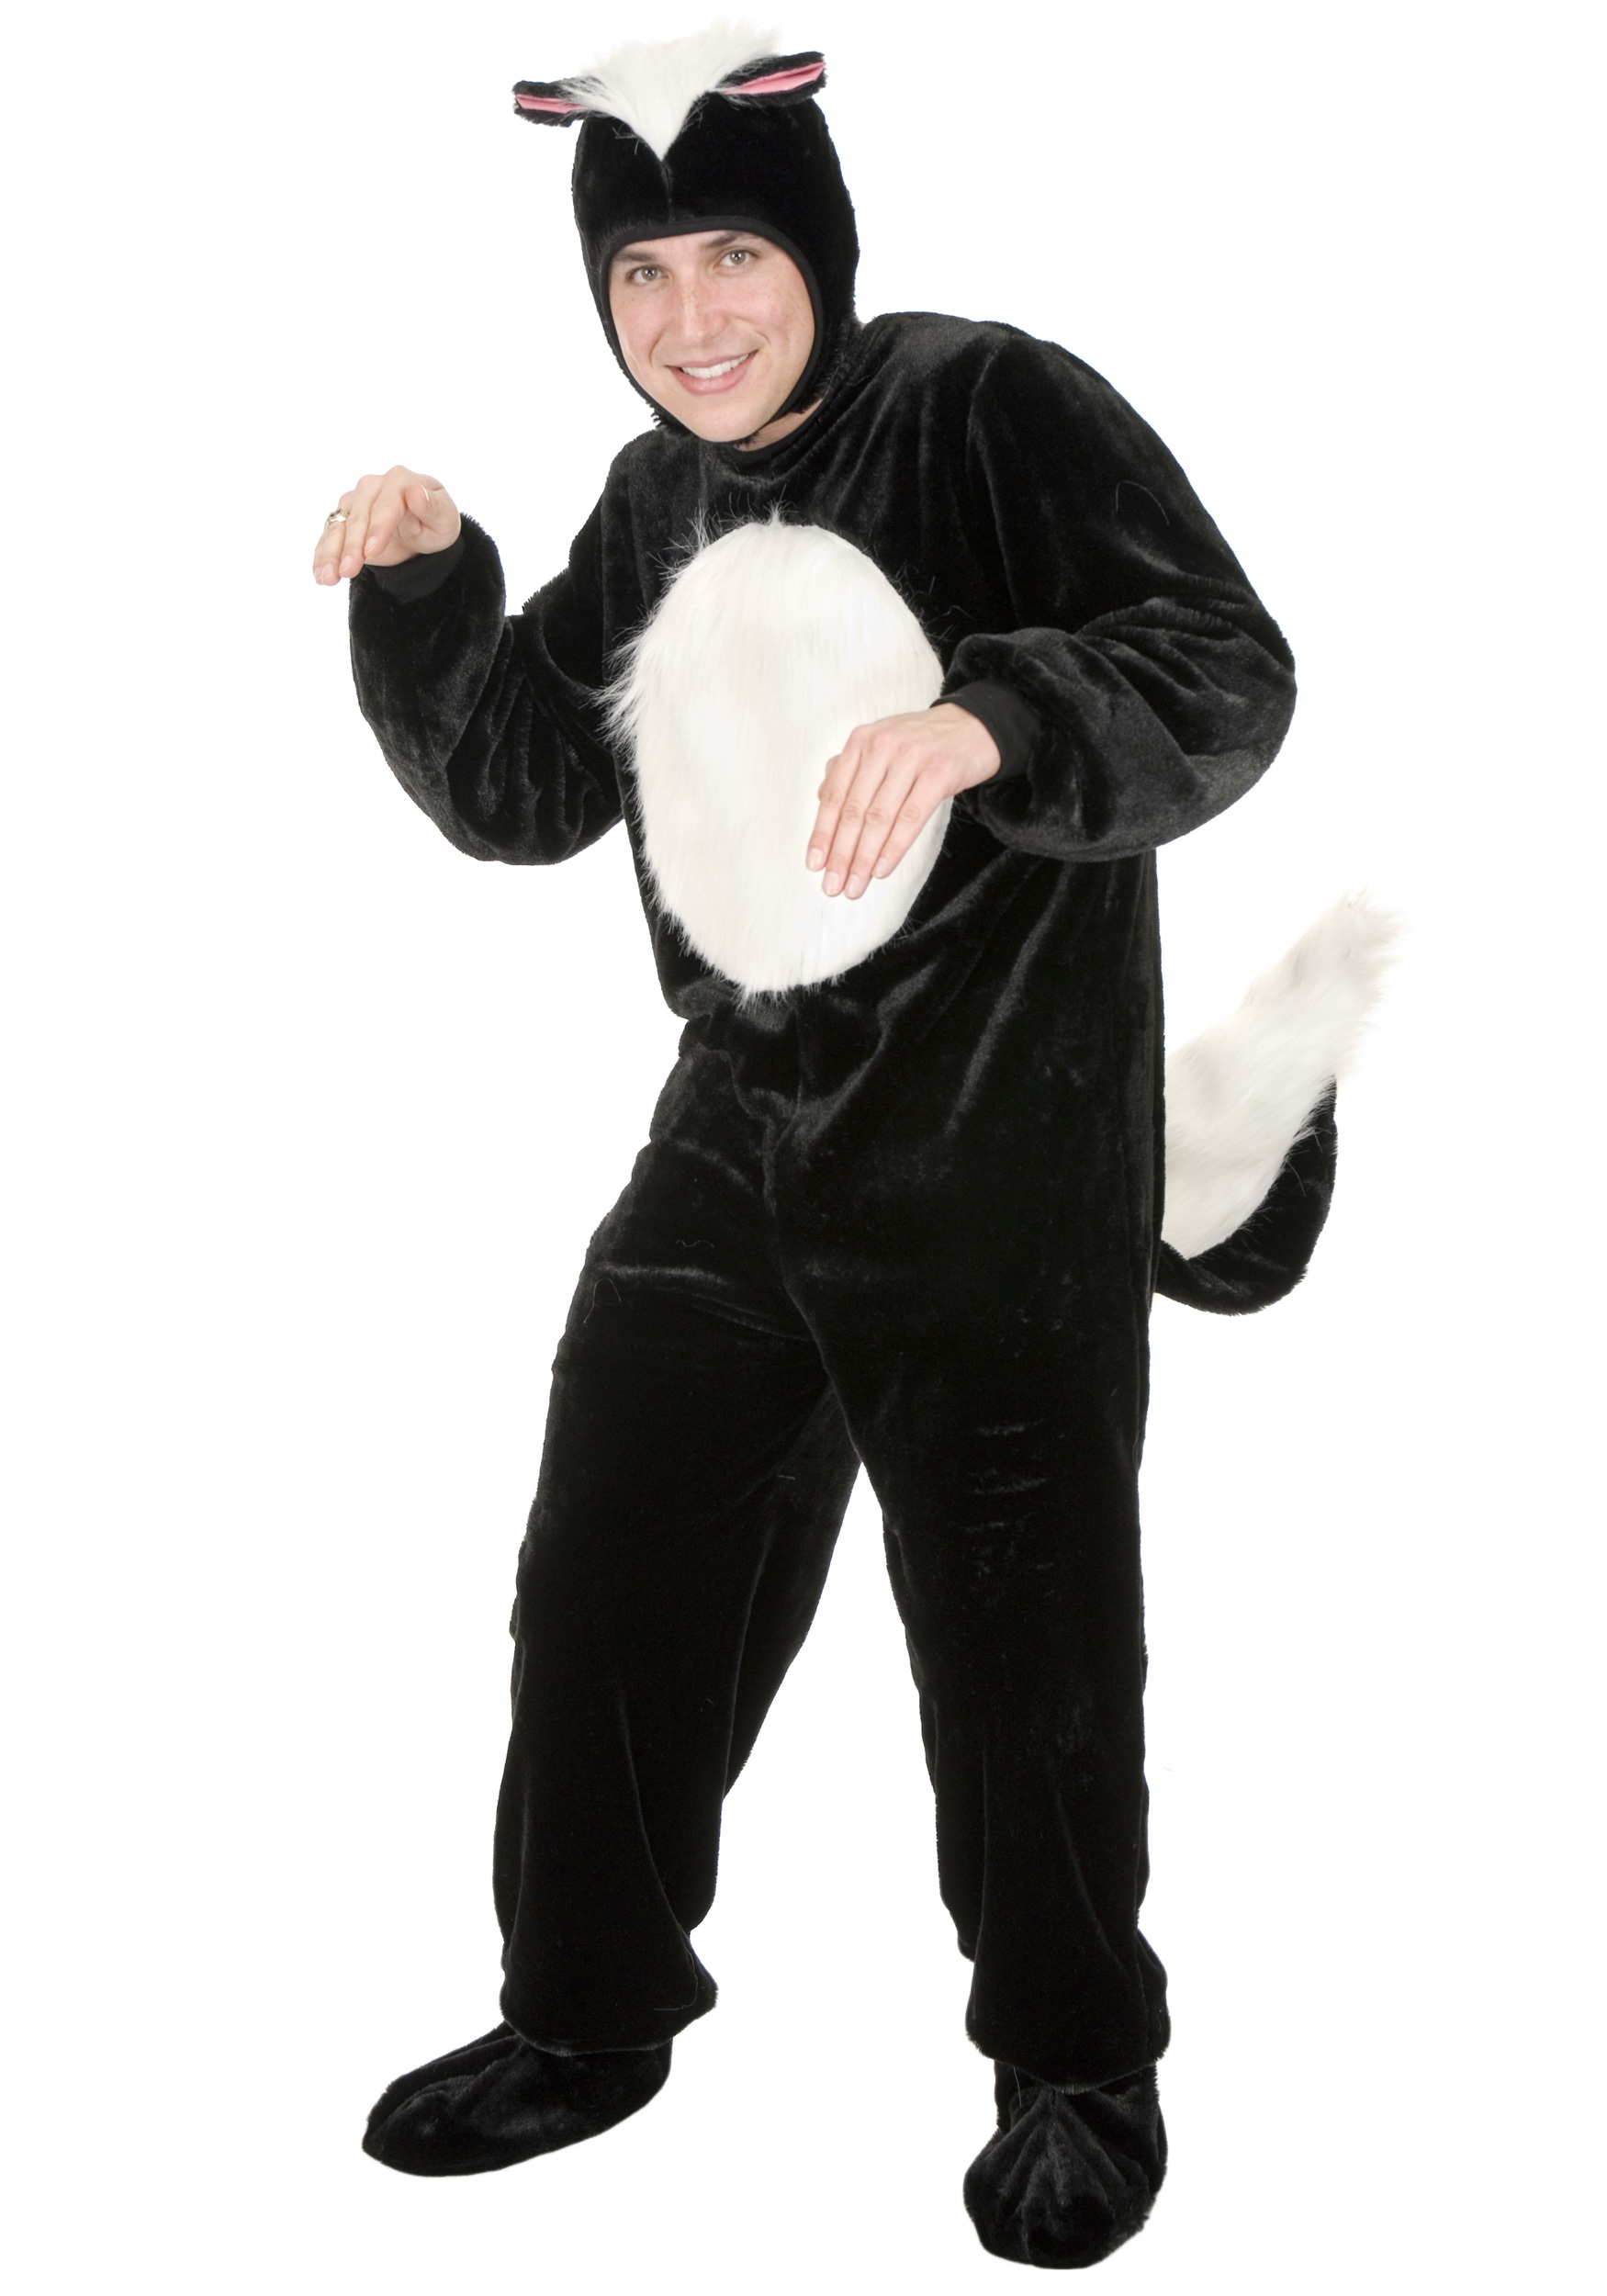 Plush Skunk Adult Halloween Costume Animal Black White Mens Womens Stinky New